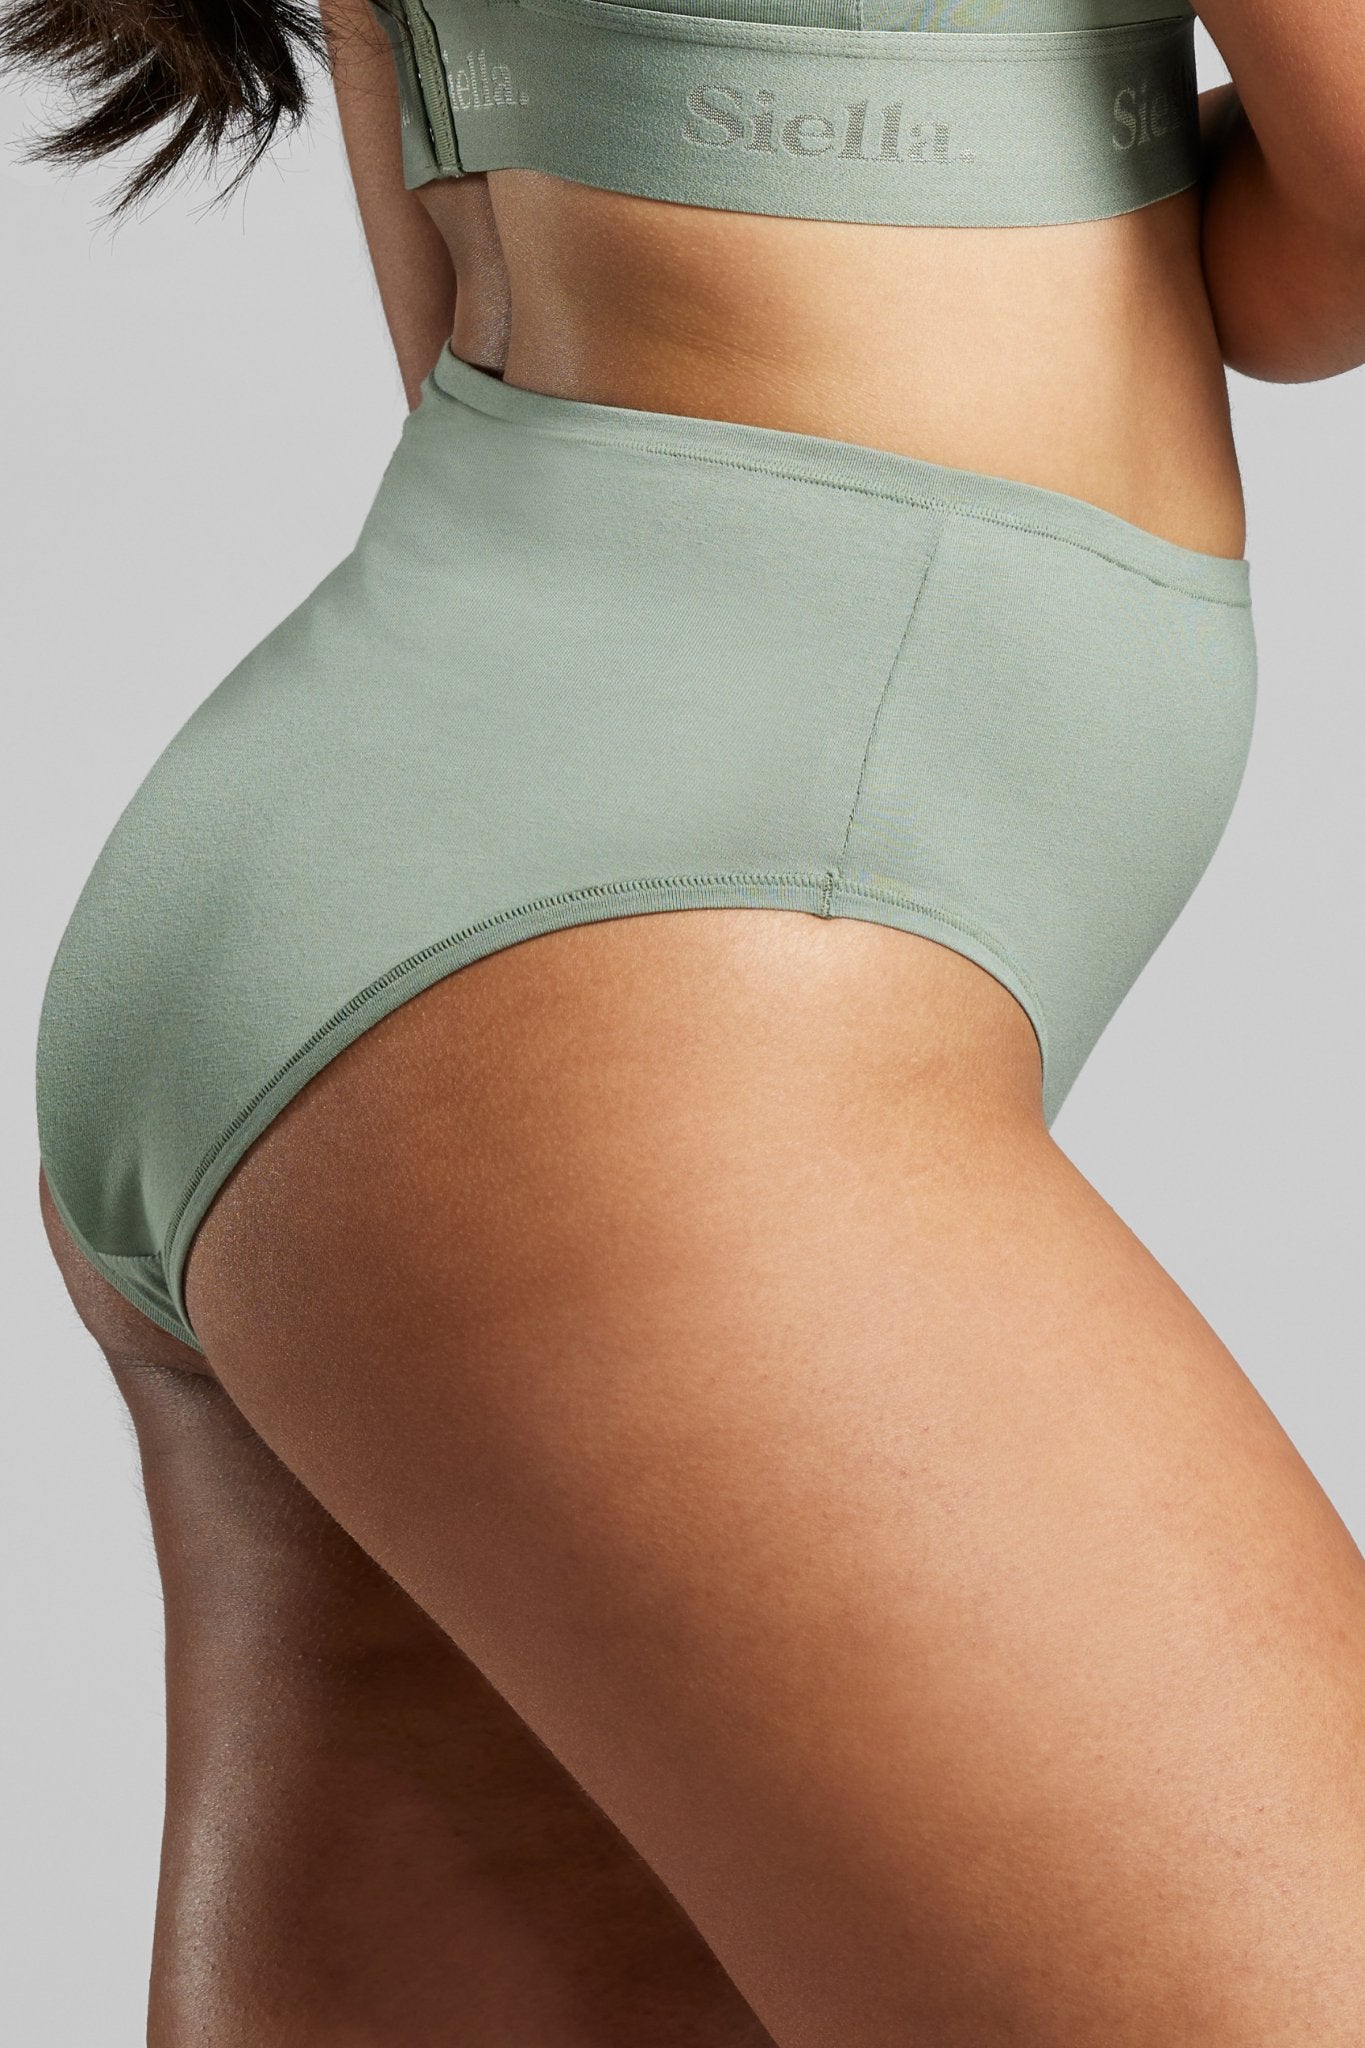 Organic Cotton Women's Underwear Full Brief - 3 pk #478OC - Basics